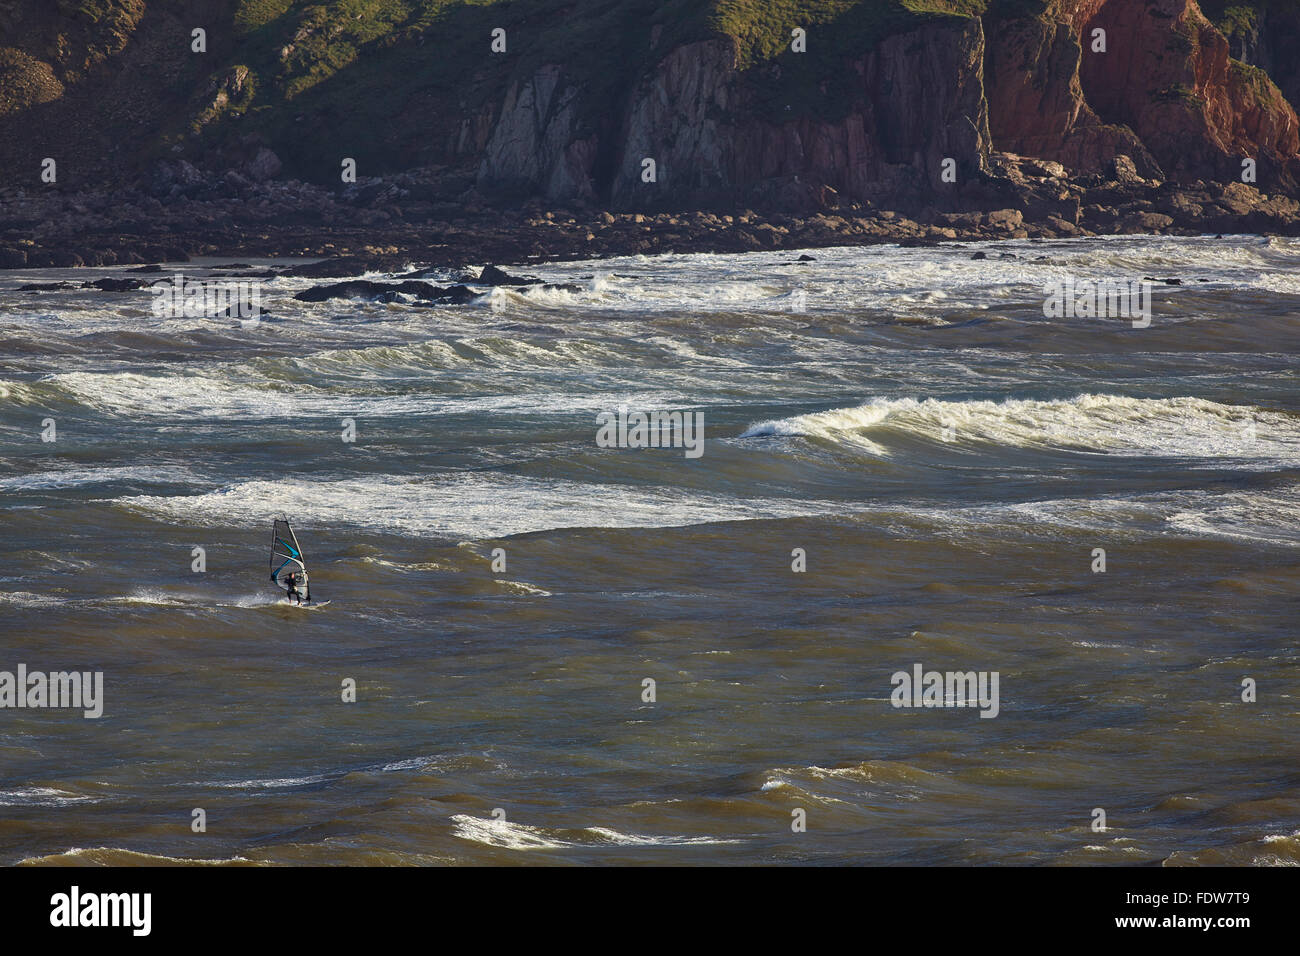 Windsurfers in storm surf at Bigbury-on-Sea, Devon, Great Britain. Stock Photo